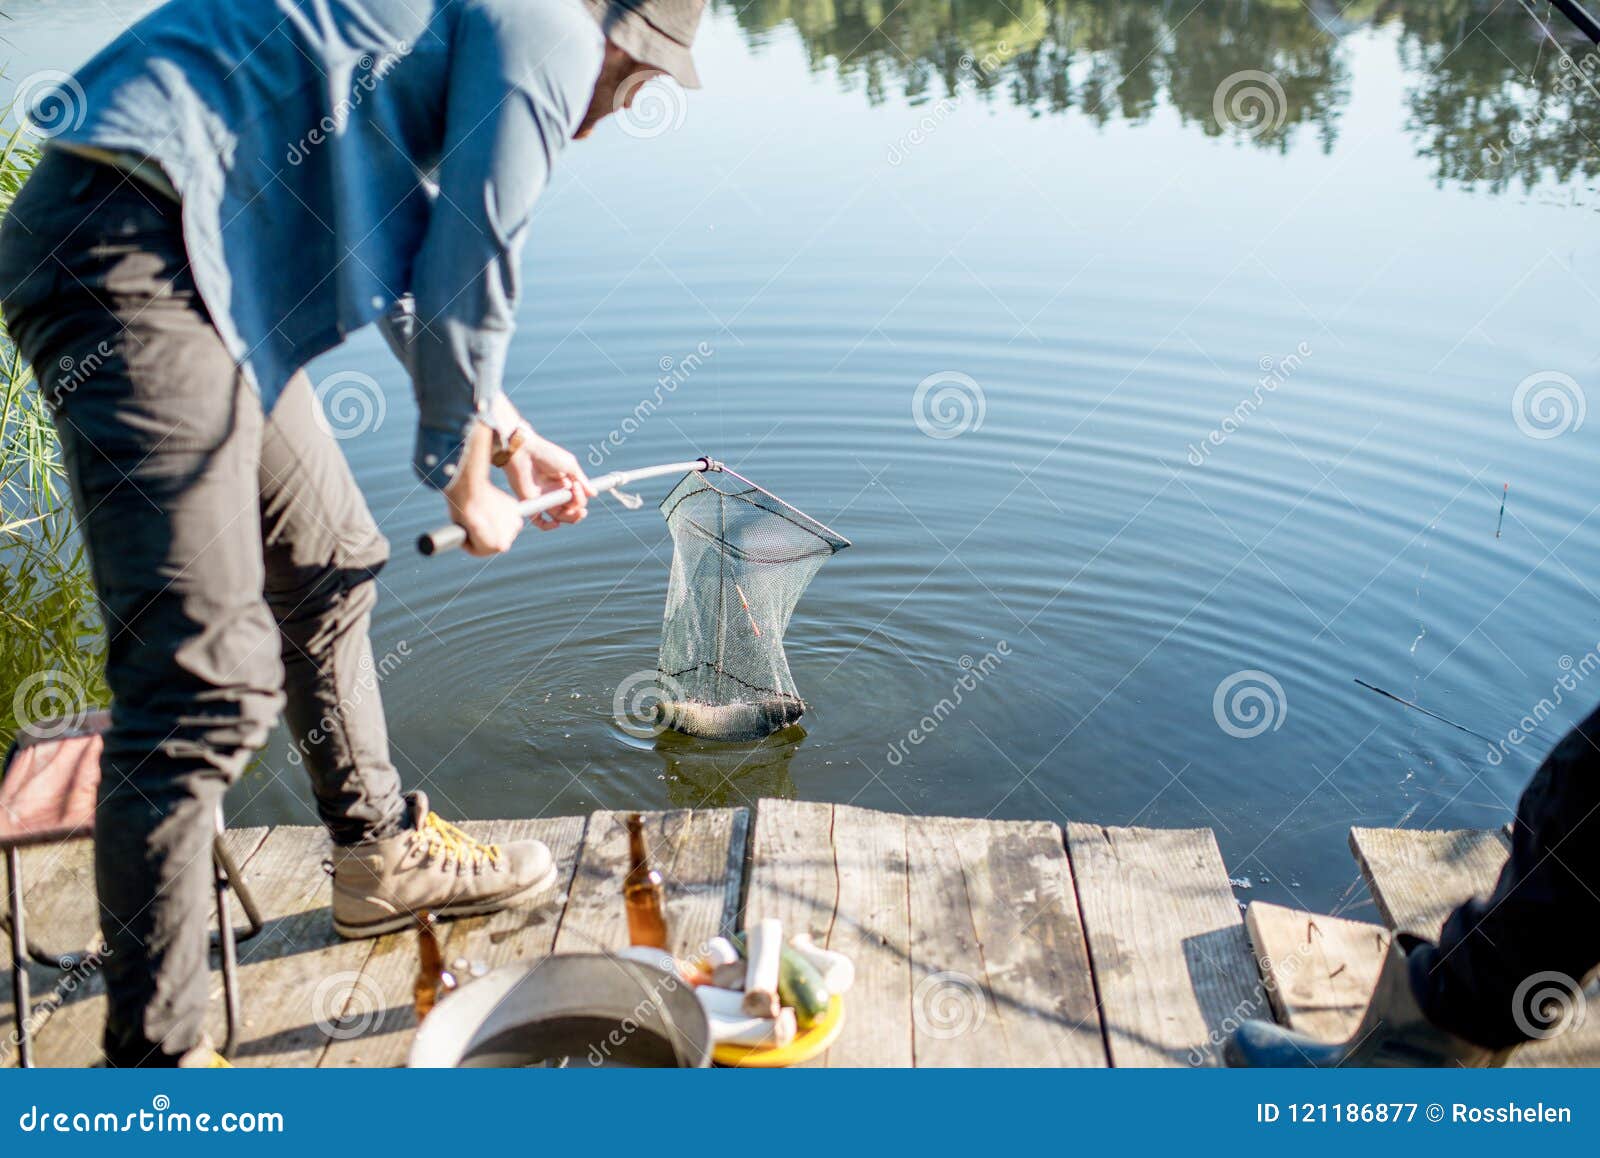 https://thumbs.dreamstime.com/z/fisherman-catching-fish-fisherman-catching-big-fish-fishing-net-lake-morning-121186877.jpg